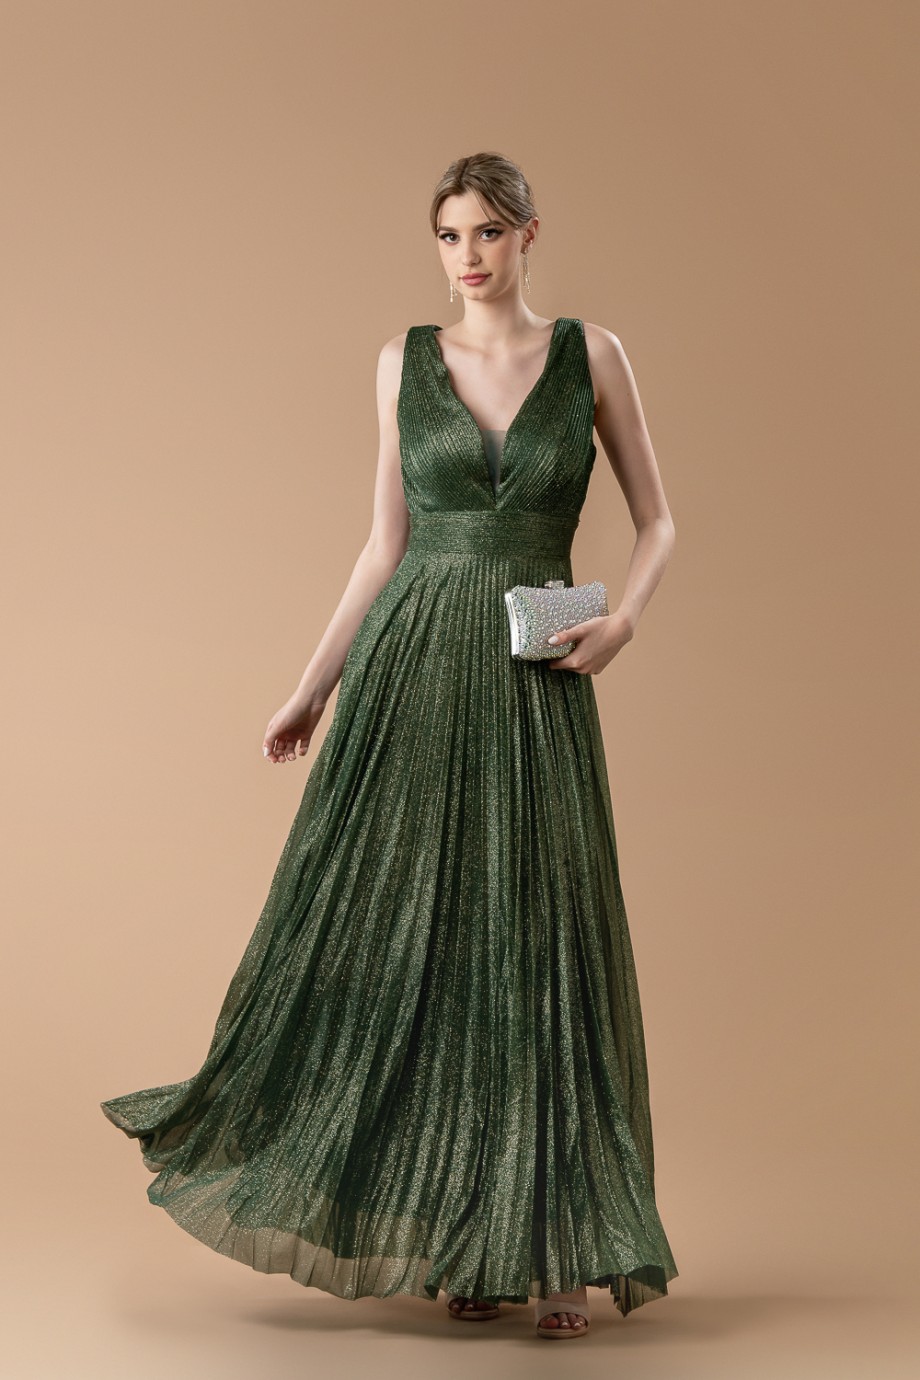 Mακρύ πράσινο φόρεμα με glitter και ντεκολτέ